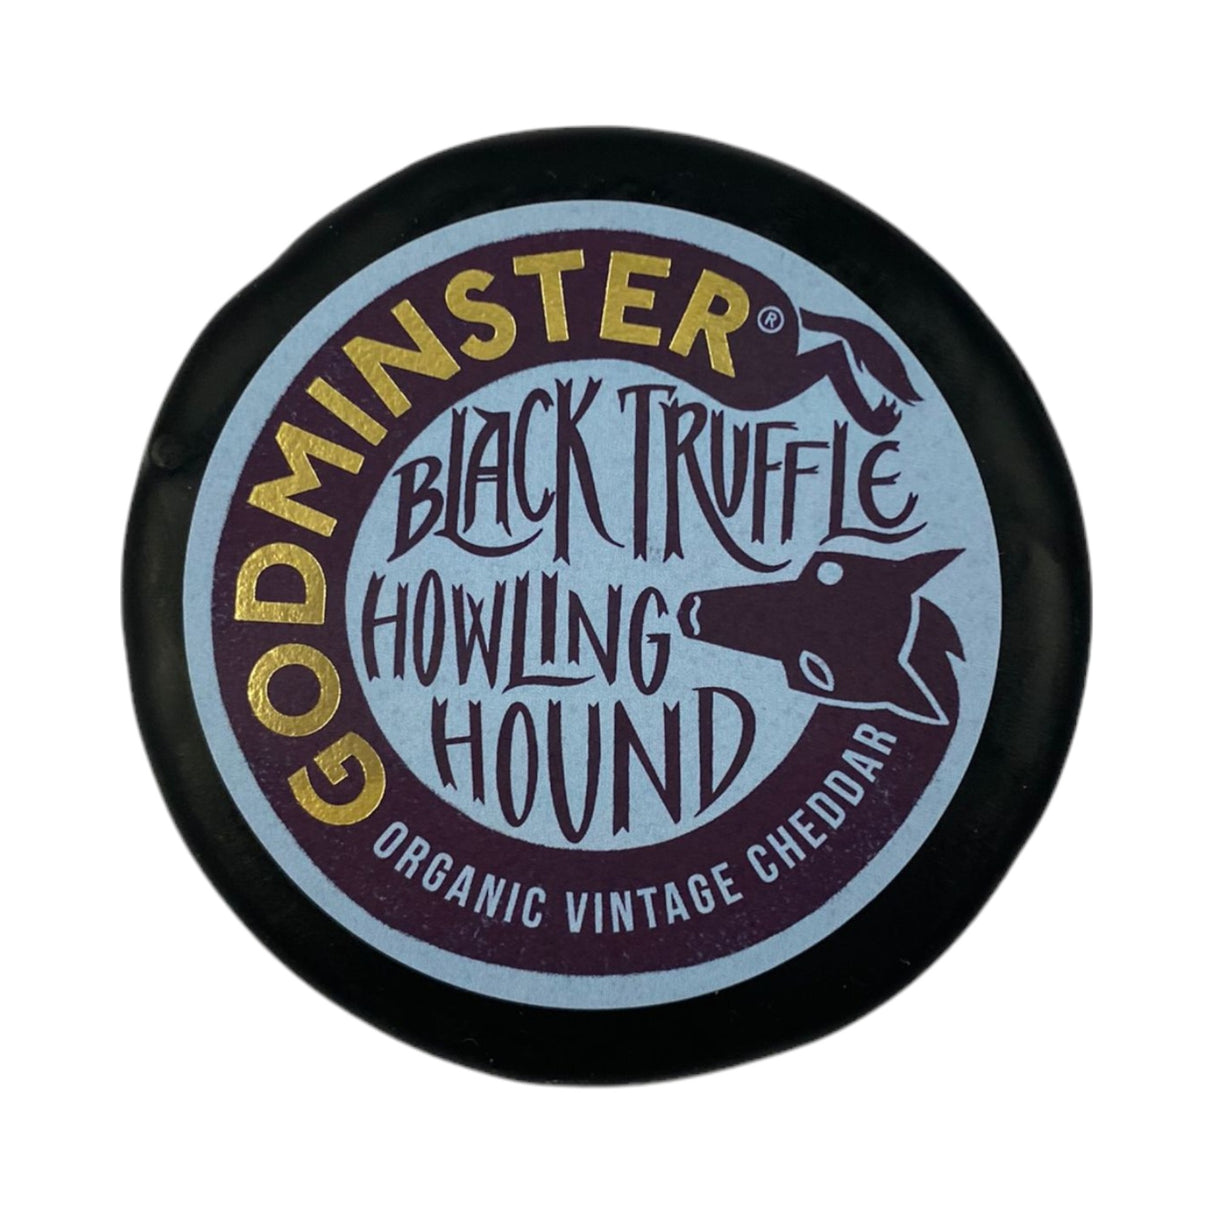 Godminster - Black Truffle Vintage Organic Cheddar 200g